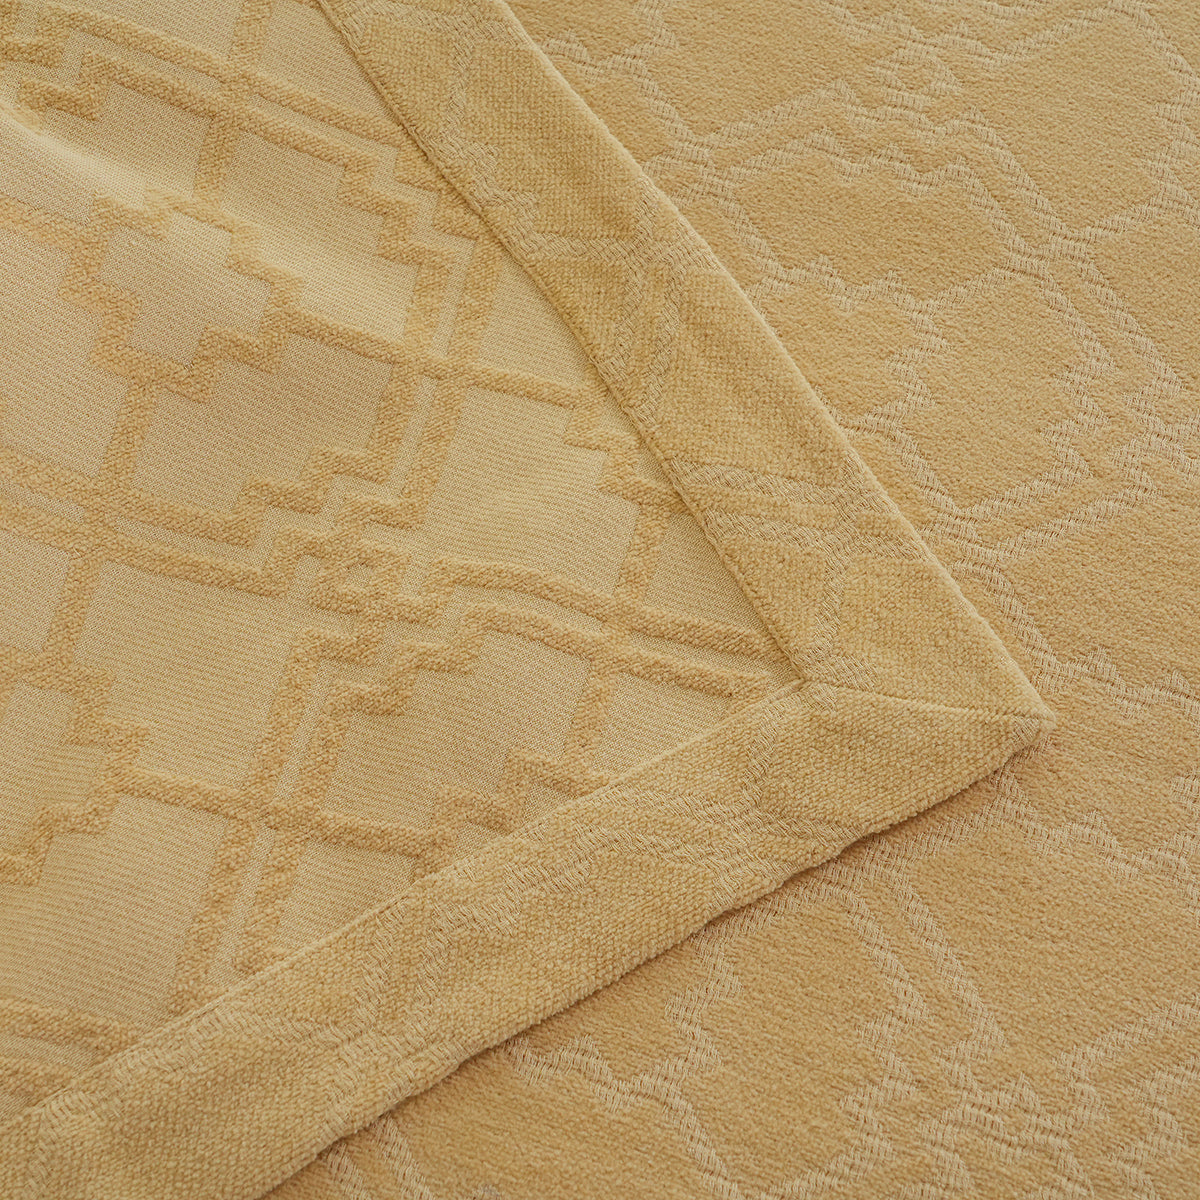 Utopian Regan Geometric Frills 100% Cotton Soft 8PC Bed Cover Set